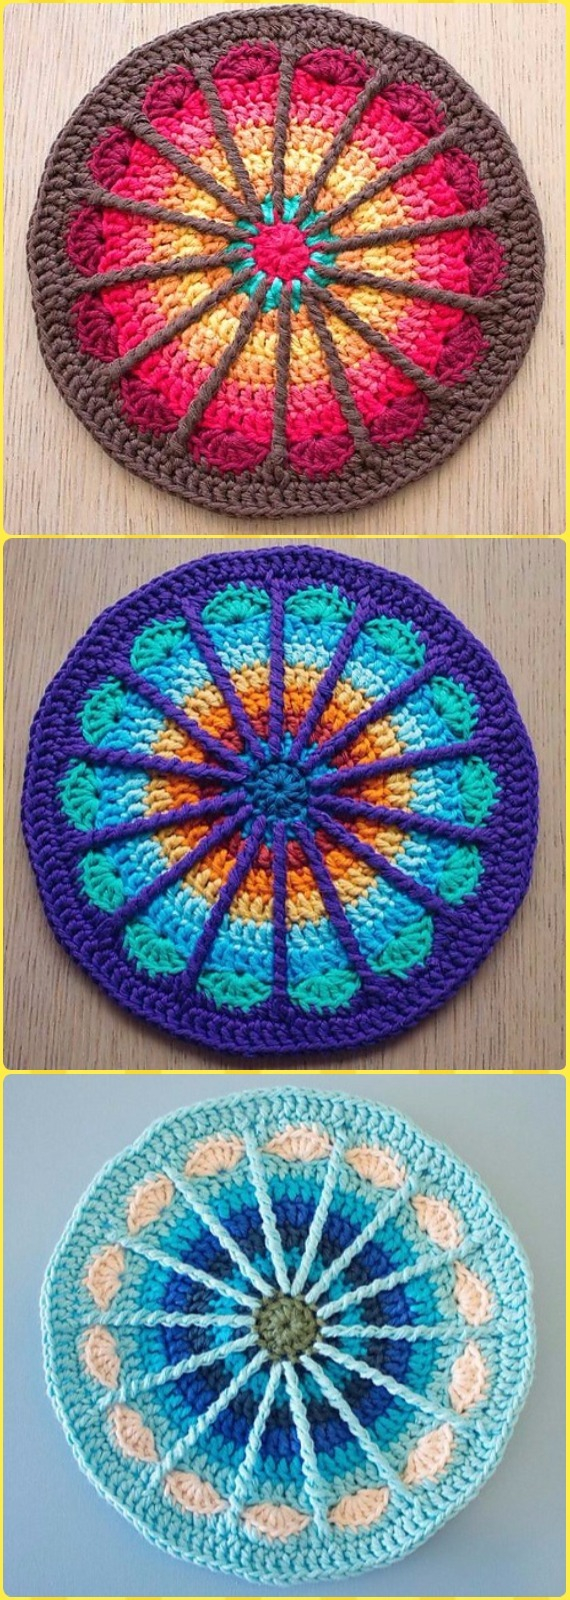 Free Crochet Potholder Patterns Crochet Pot Holder Hotpad Free Patterns